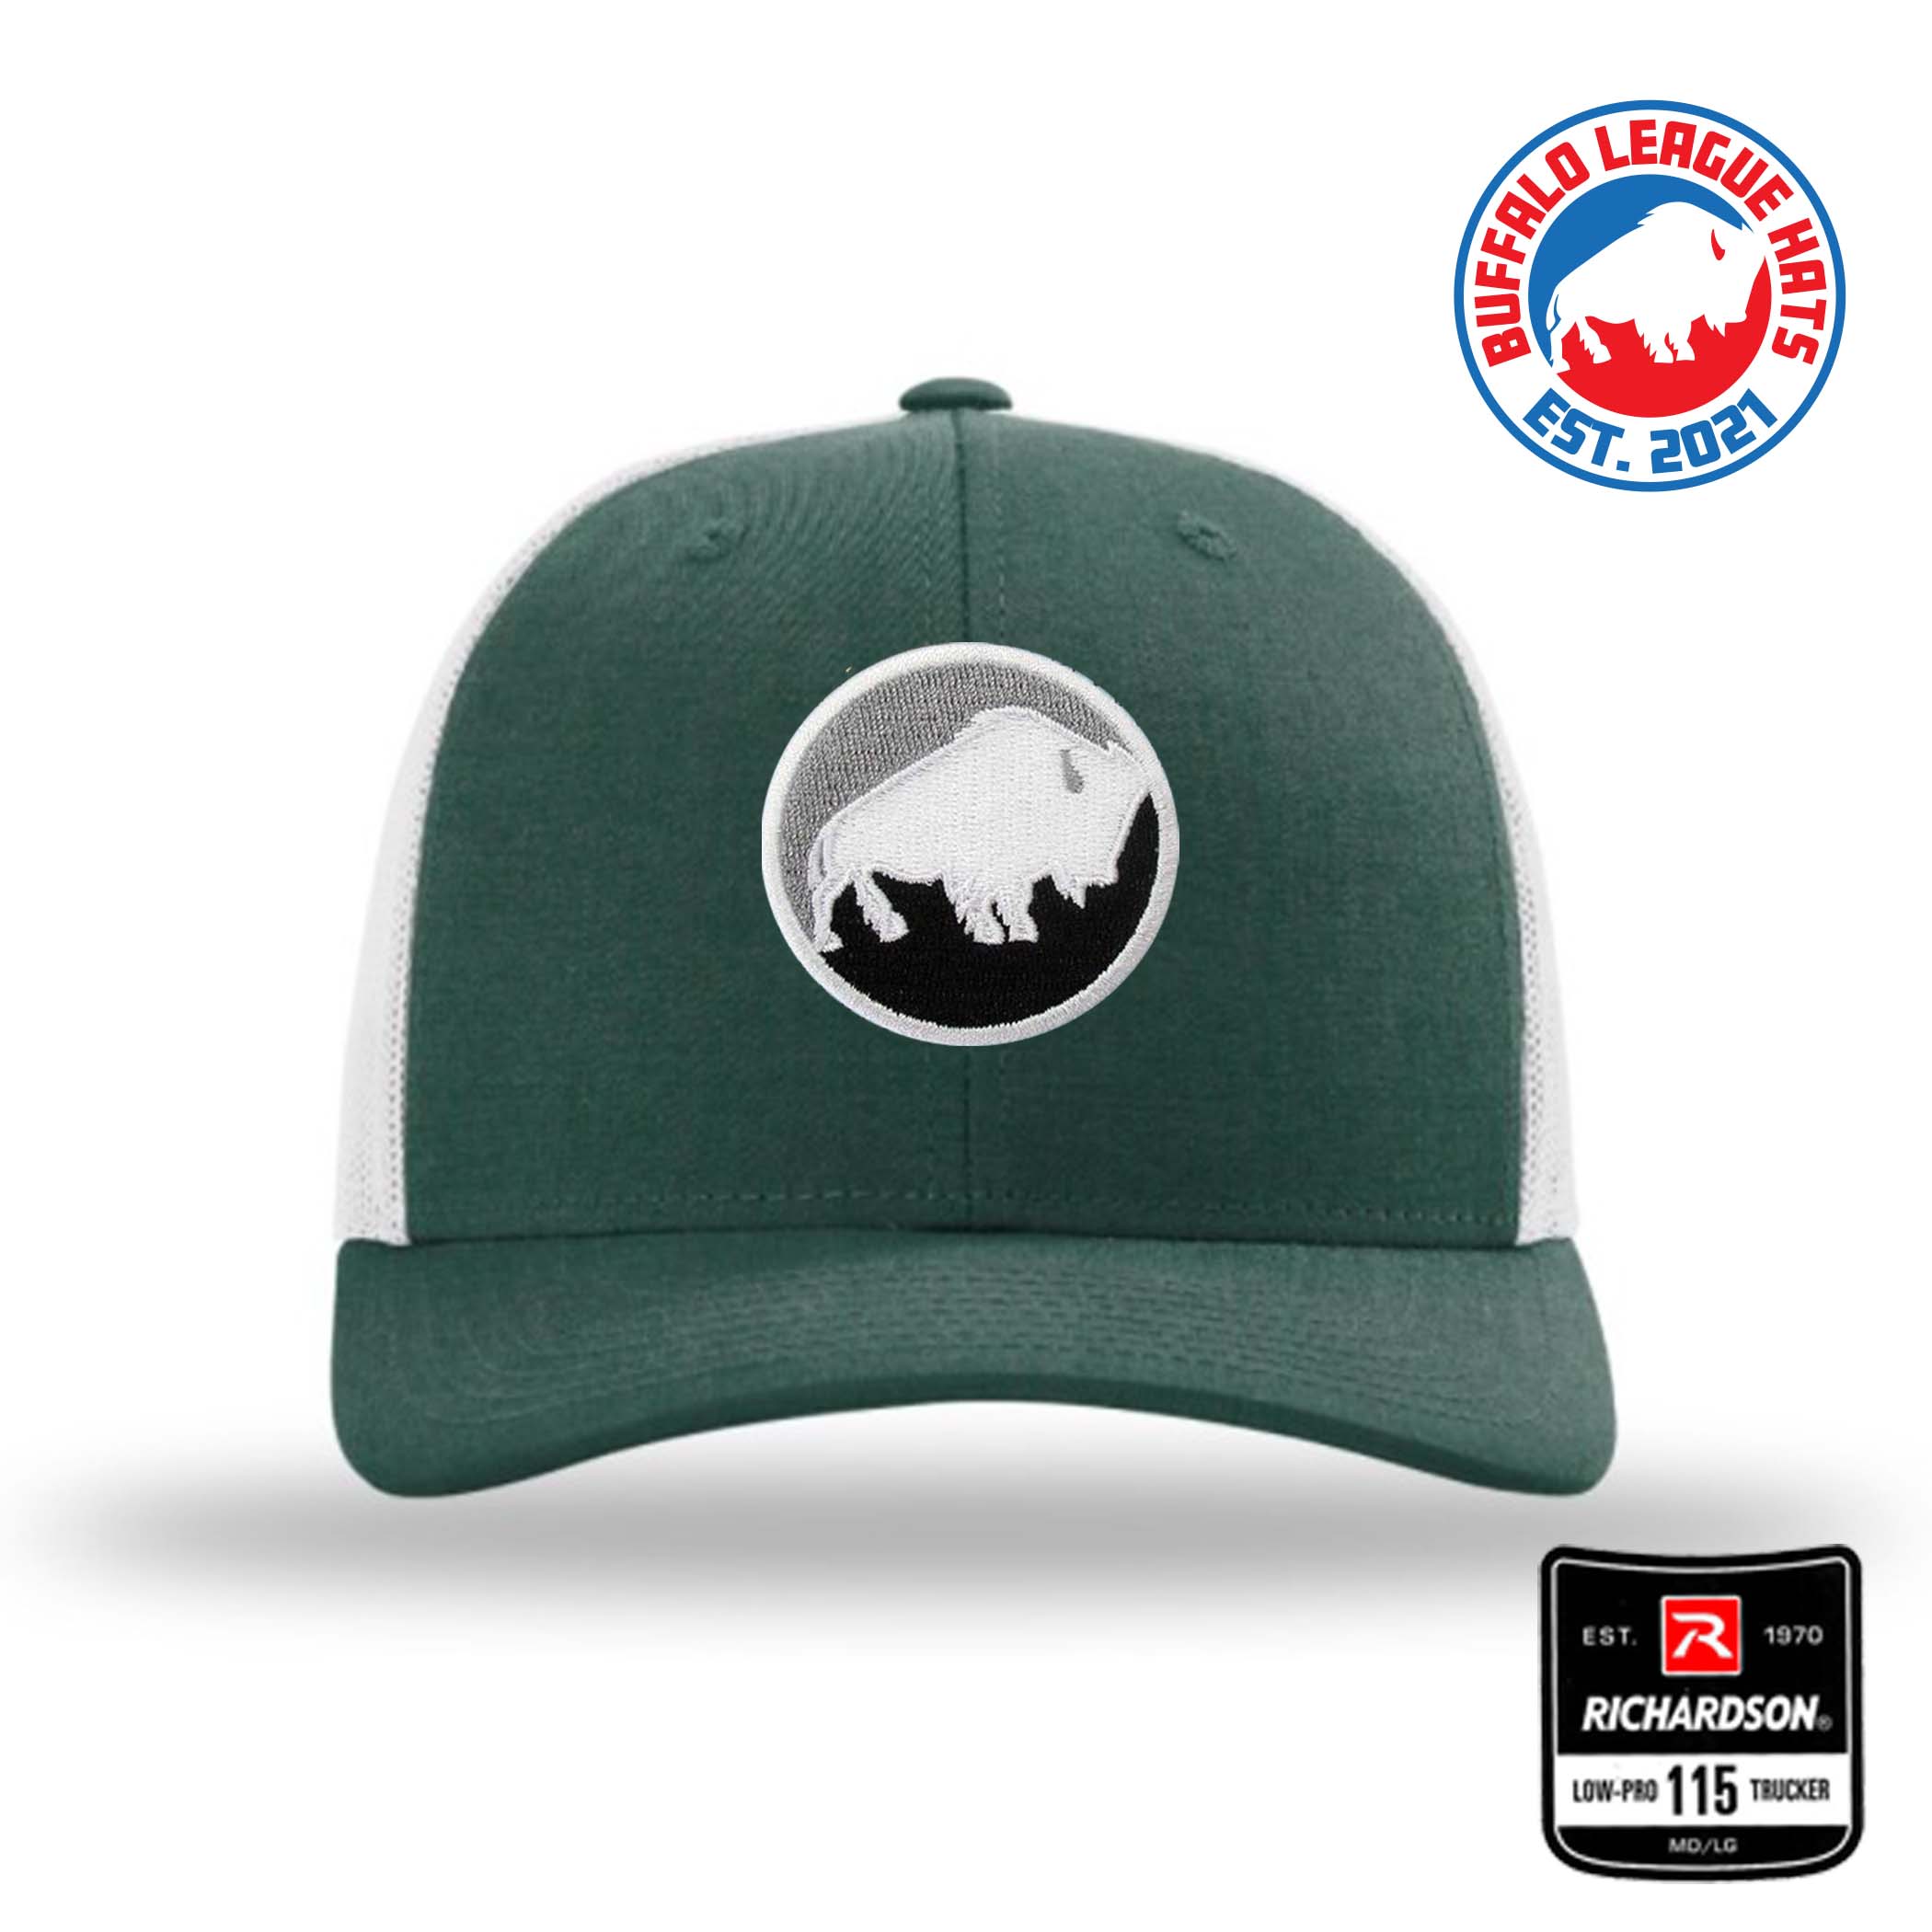 Richardson 115 Trucker by Buffalo League Hats